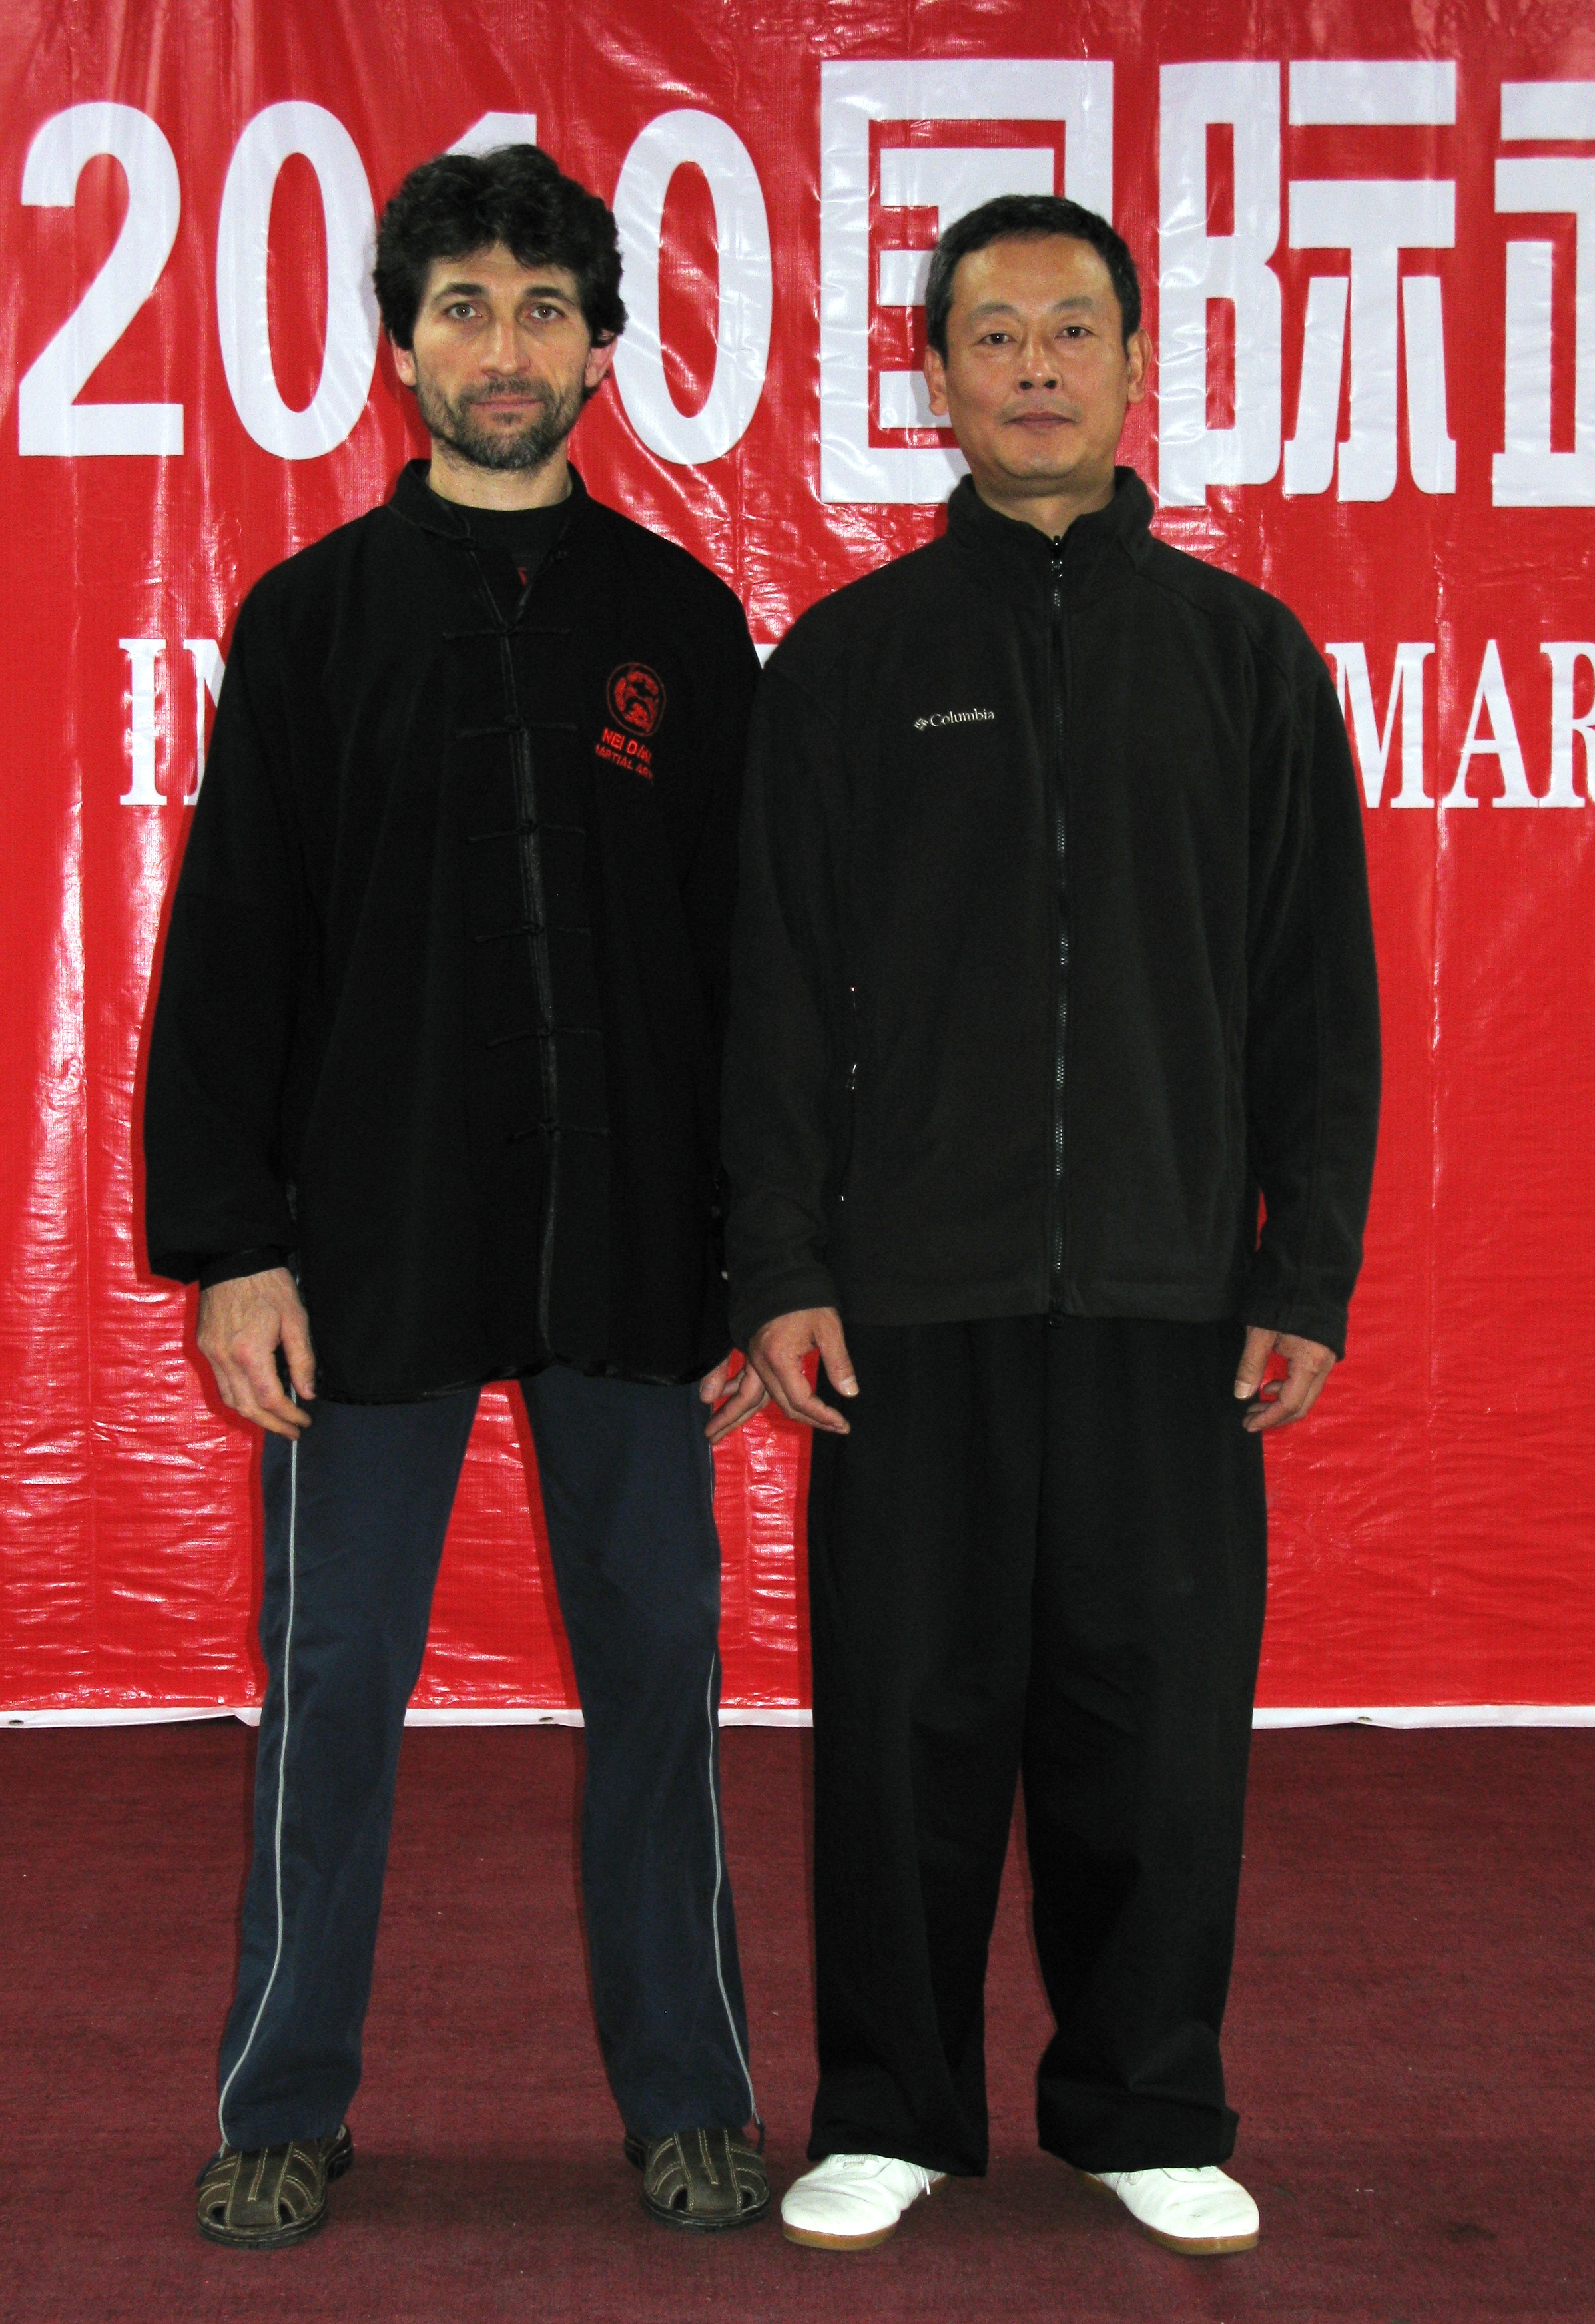 Davide Ronchetti col maestro Wu Ji al China Camp 2010 (Pechino)